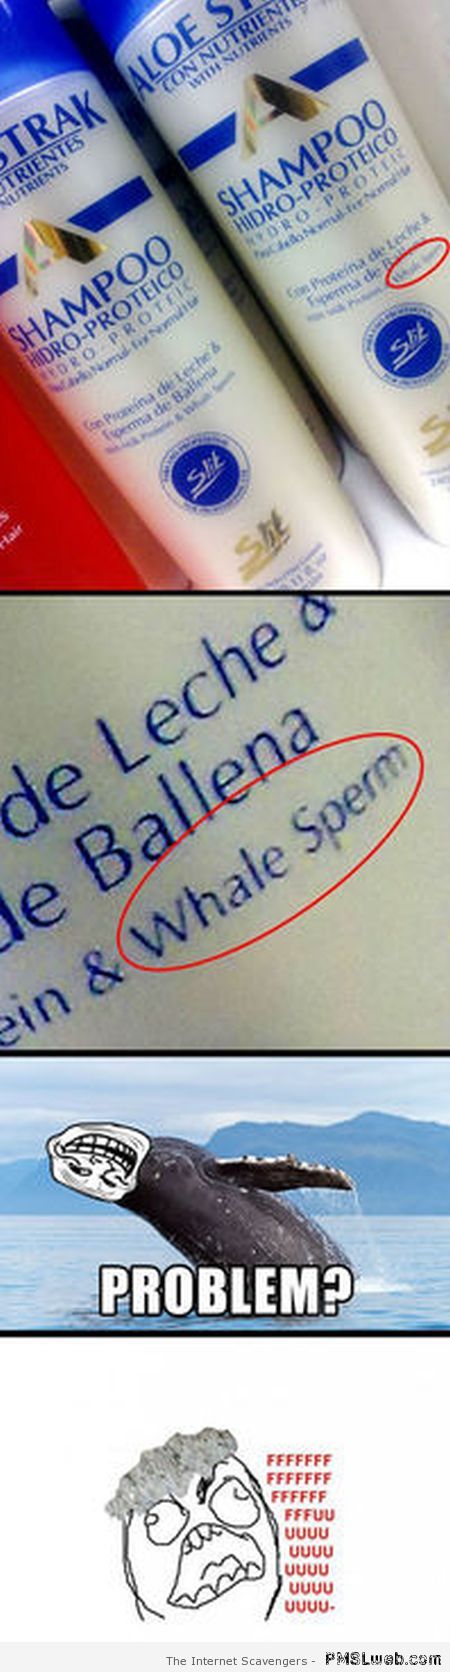 Whale sperm shampoo at PMSLweb.com